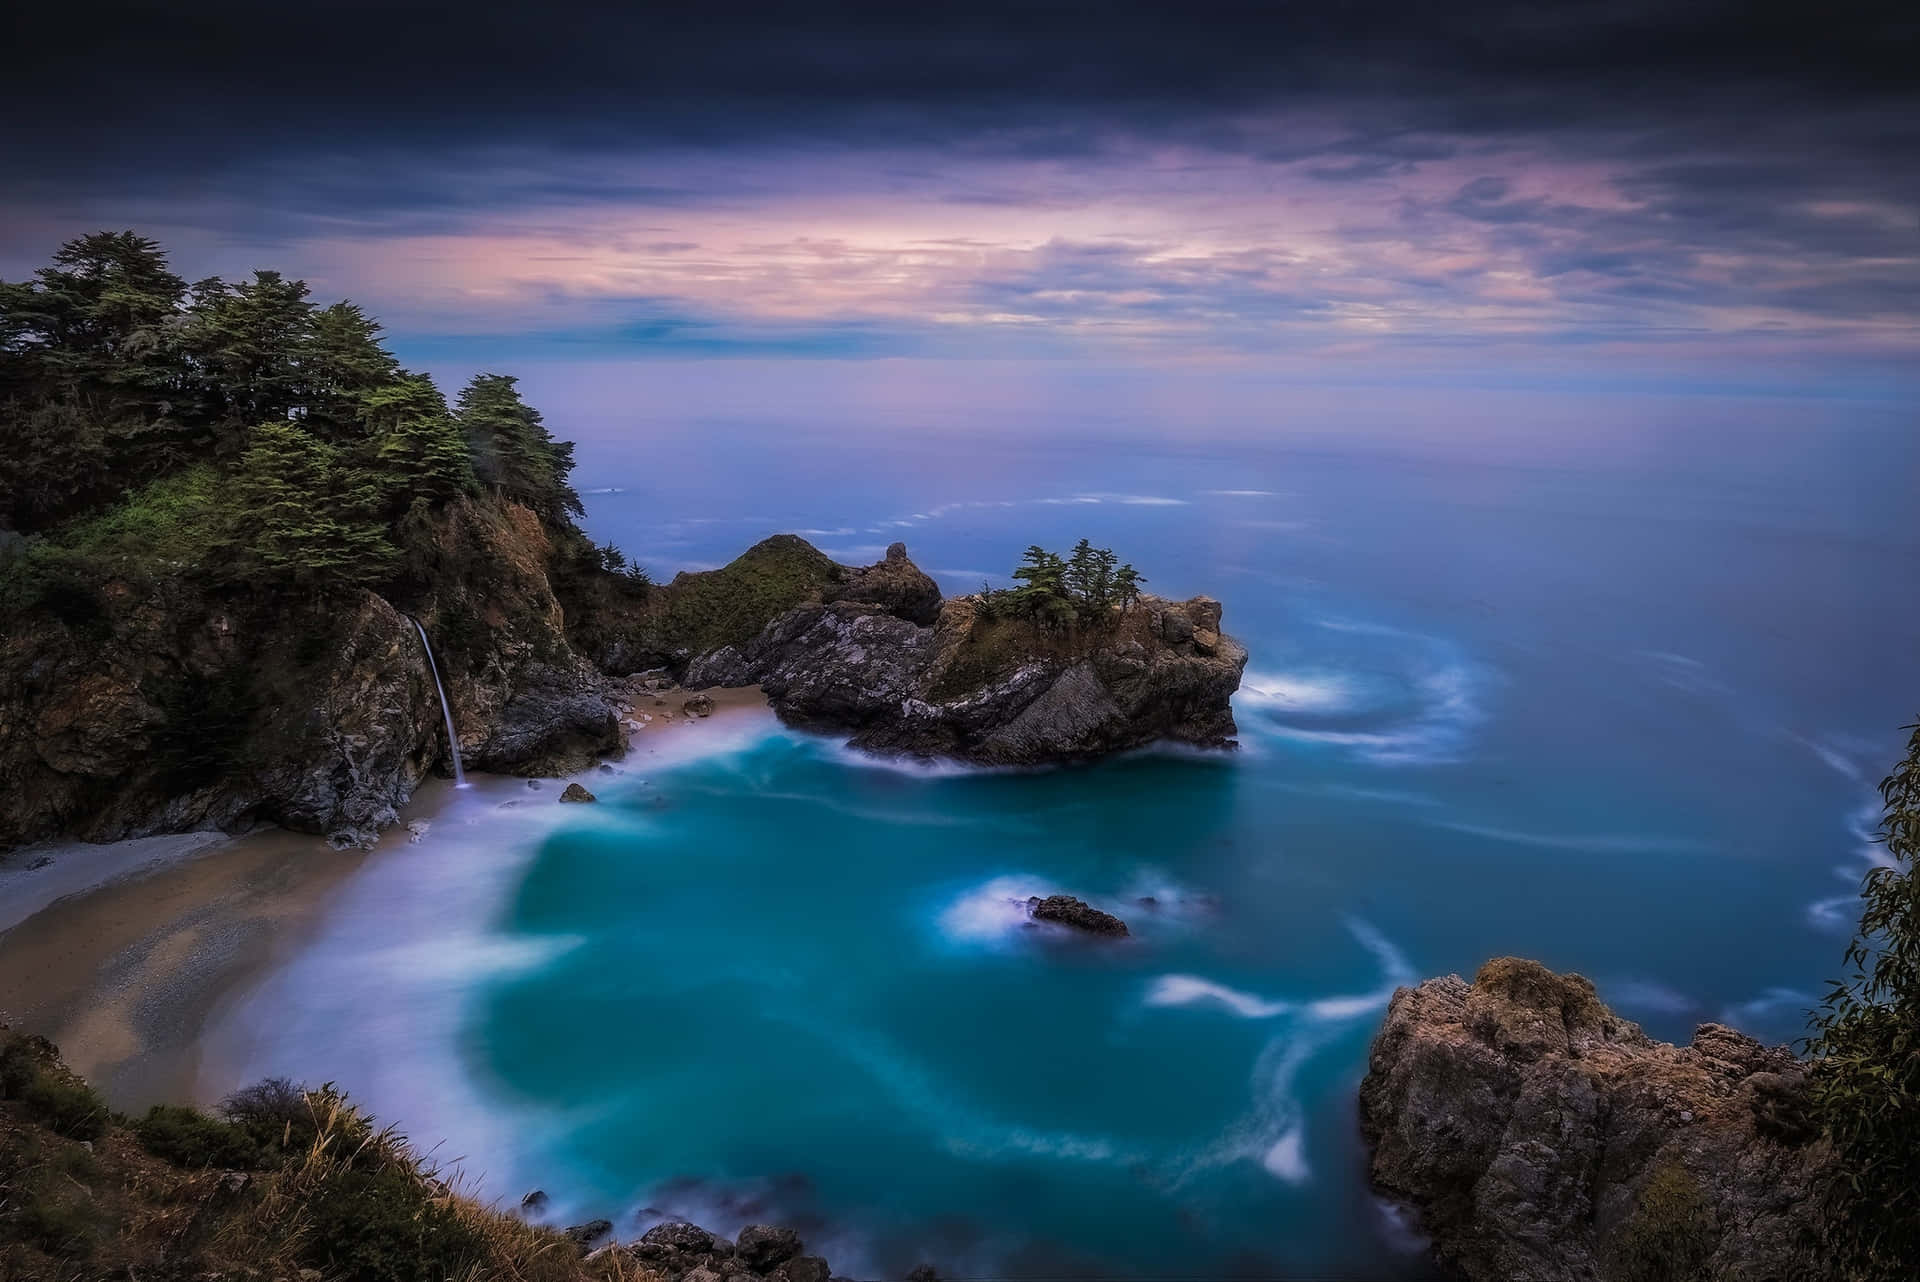 Enjoy a dramatic view of the Big Sur coastline